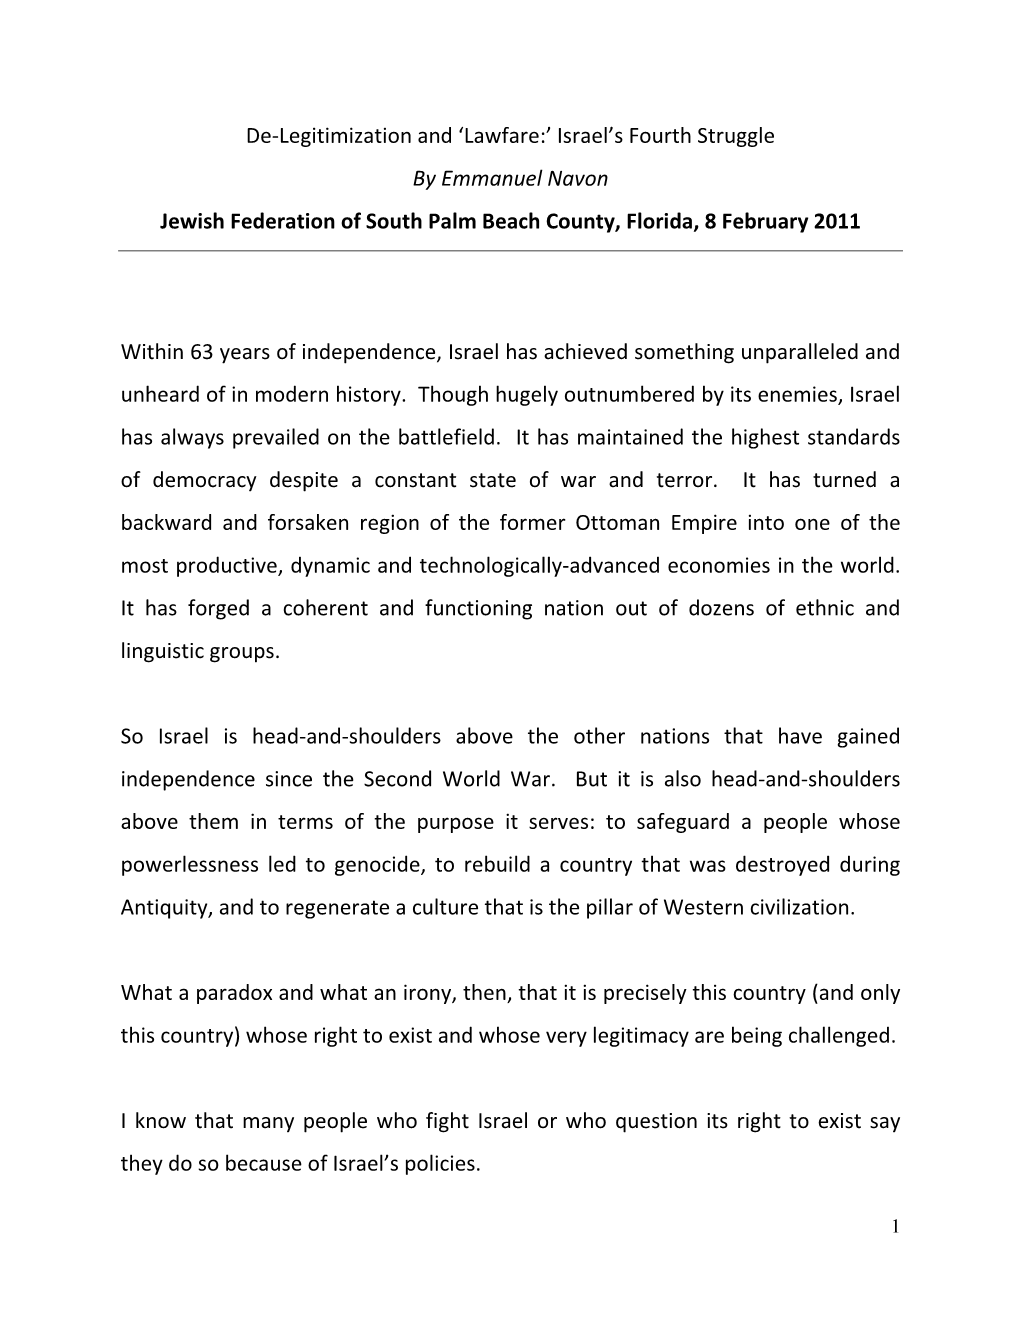 Lawfare:’ Israel’S Fourth Struggle by Emmanuel Navon Jewish Federation of South Palm Beach County, Florida, 8 February 2011